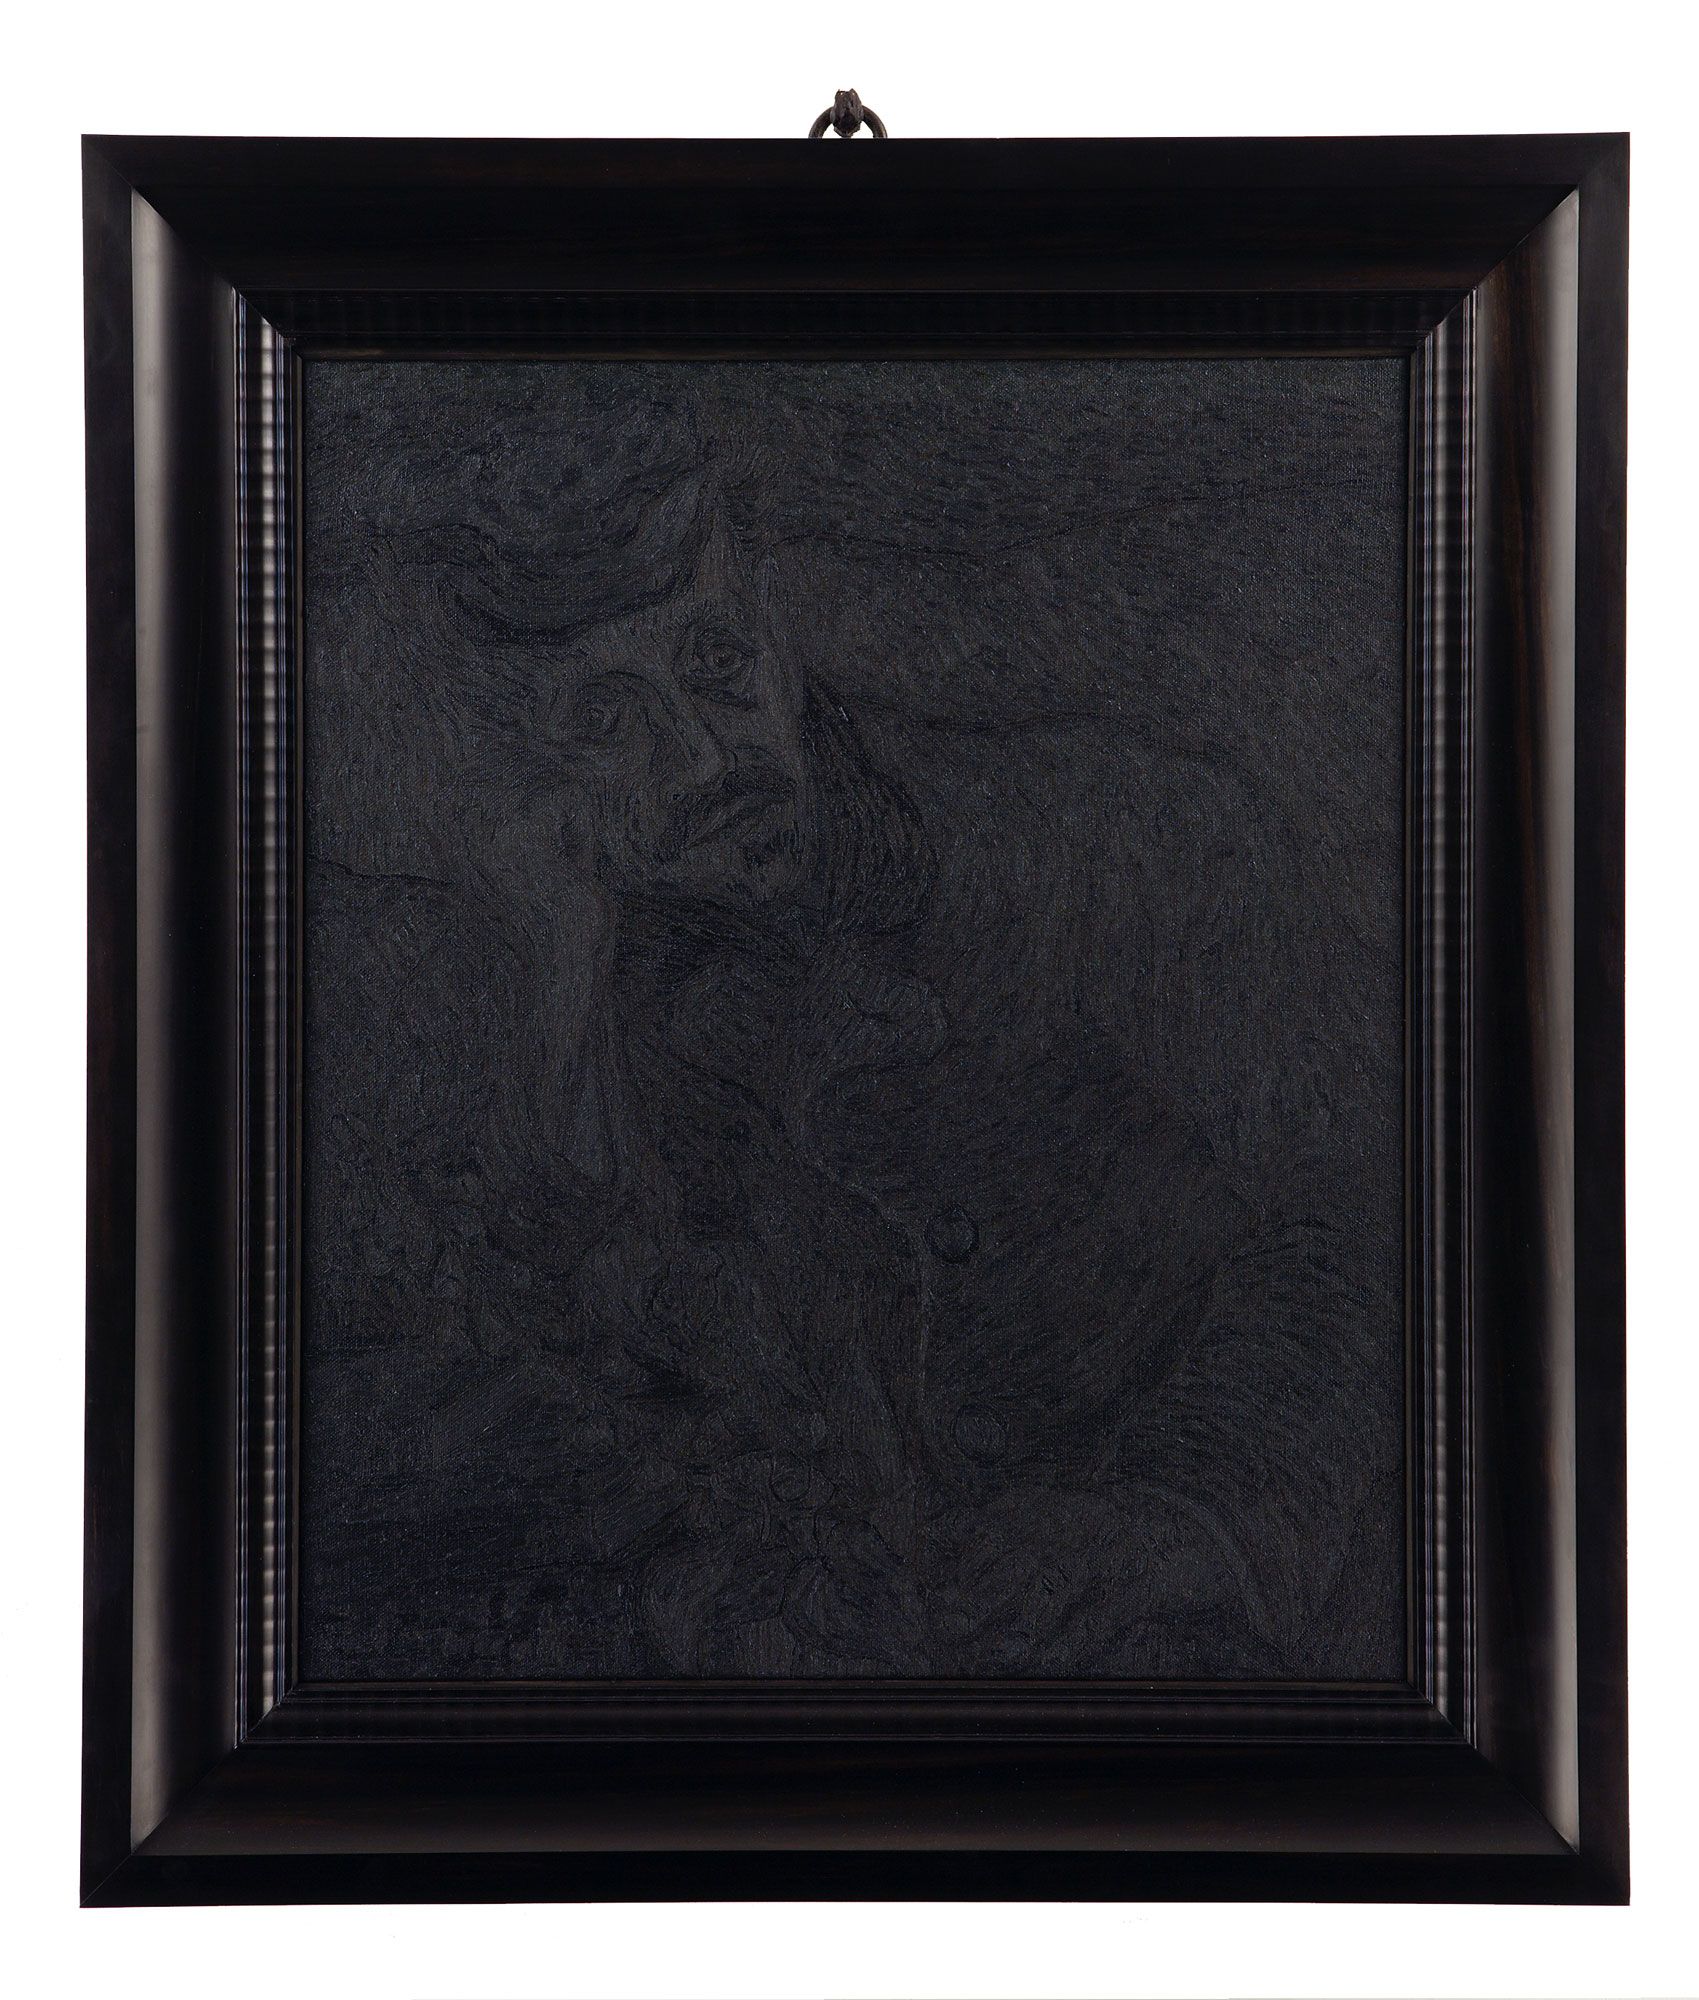 Framed portrait of Dr Gachet in black by British artist Mark Alexander.